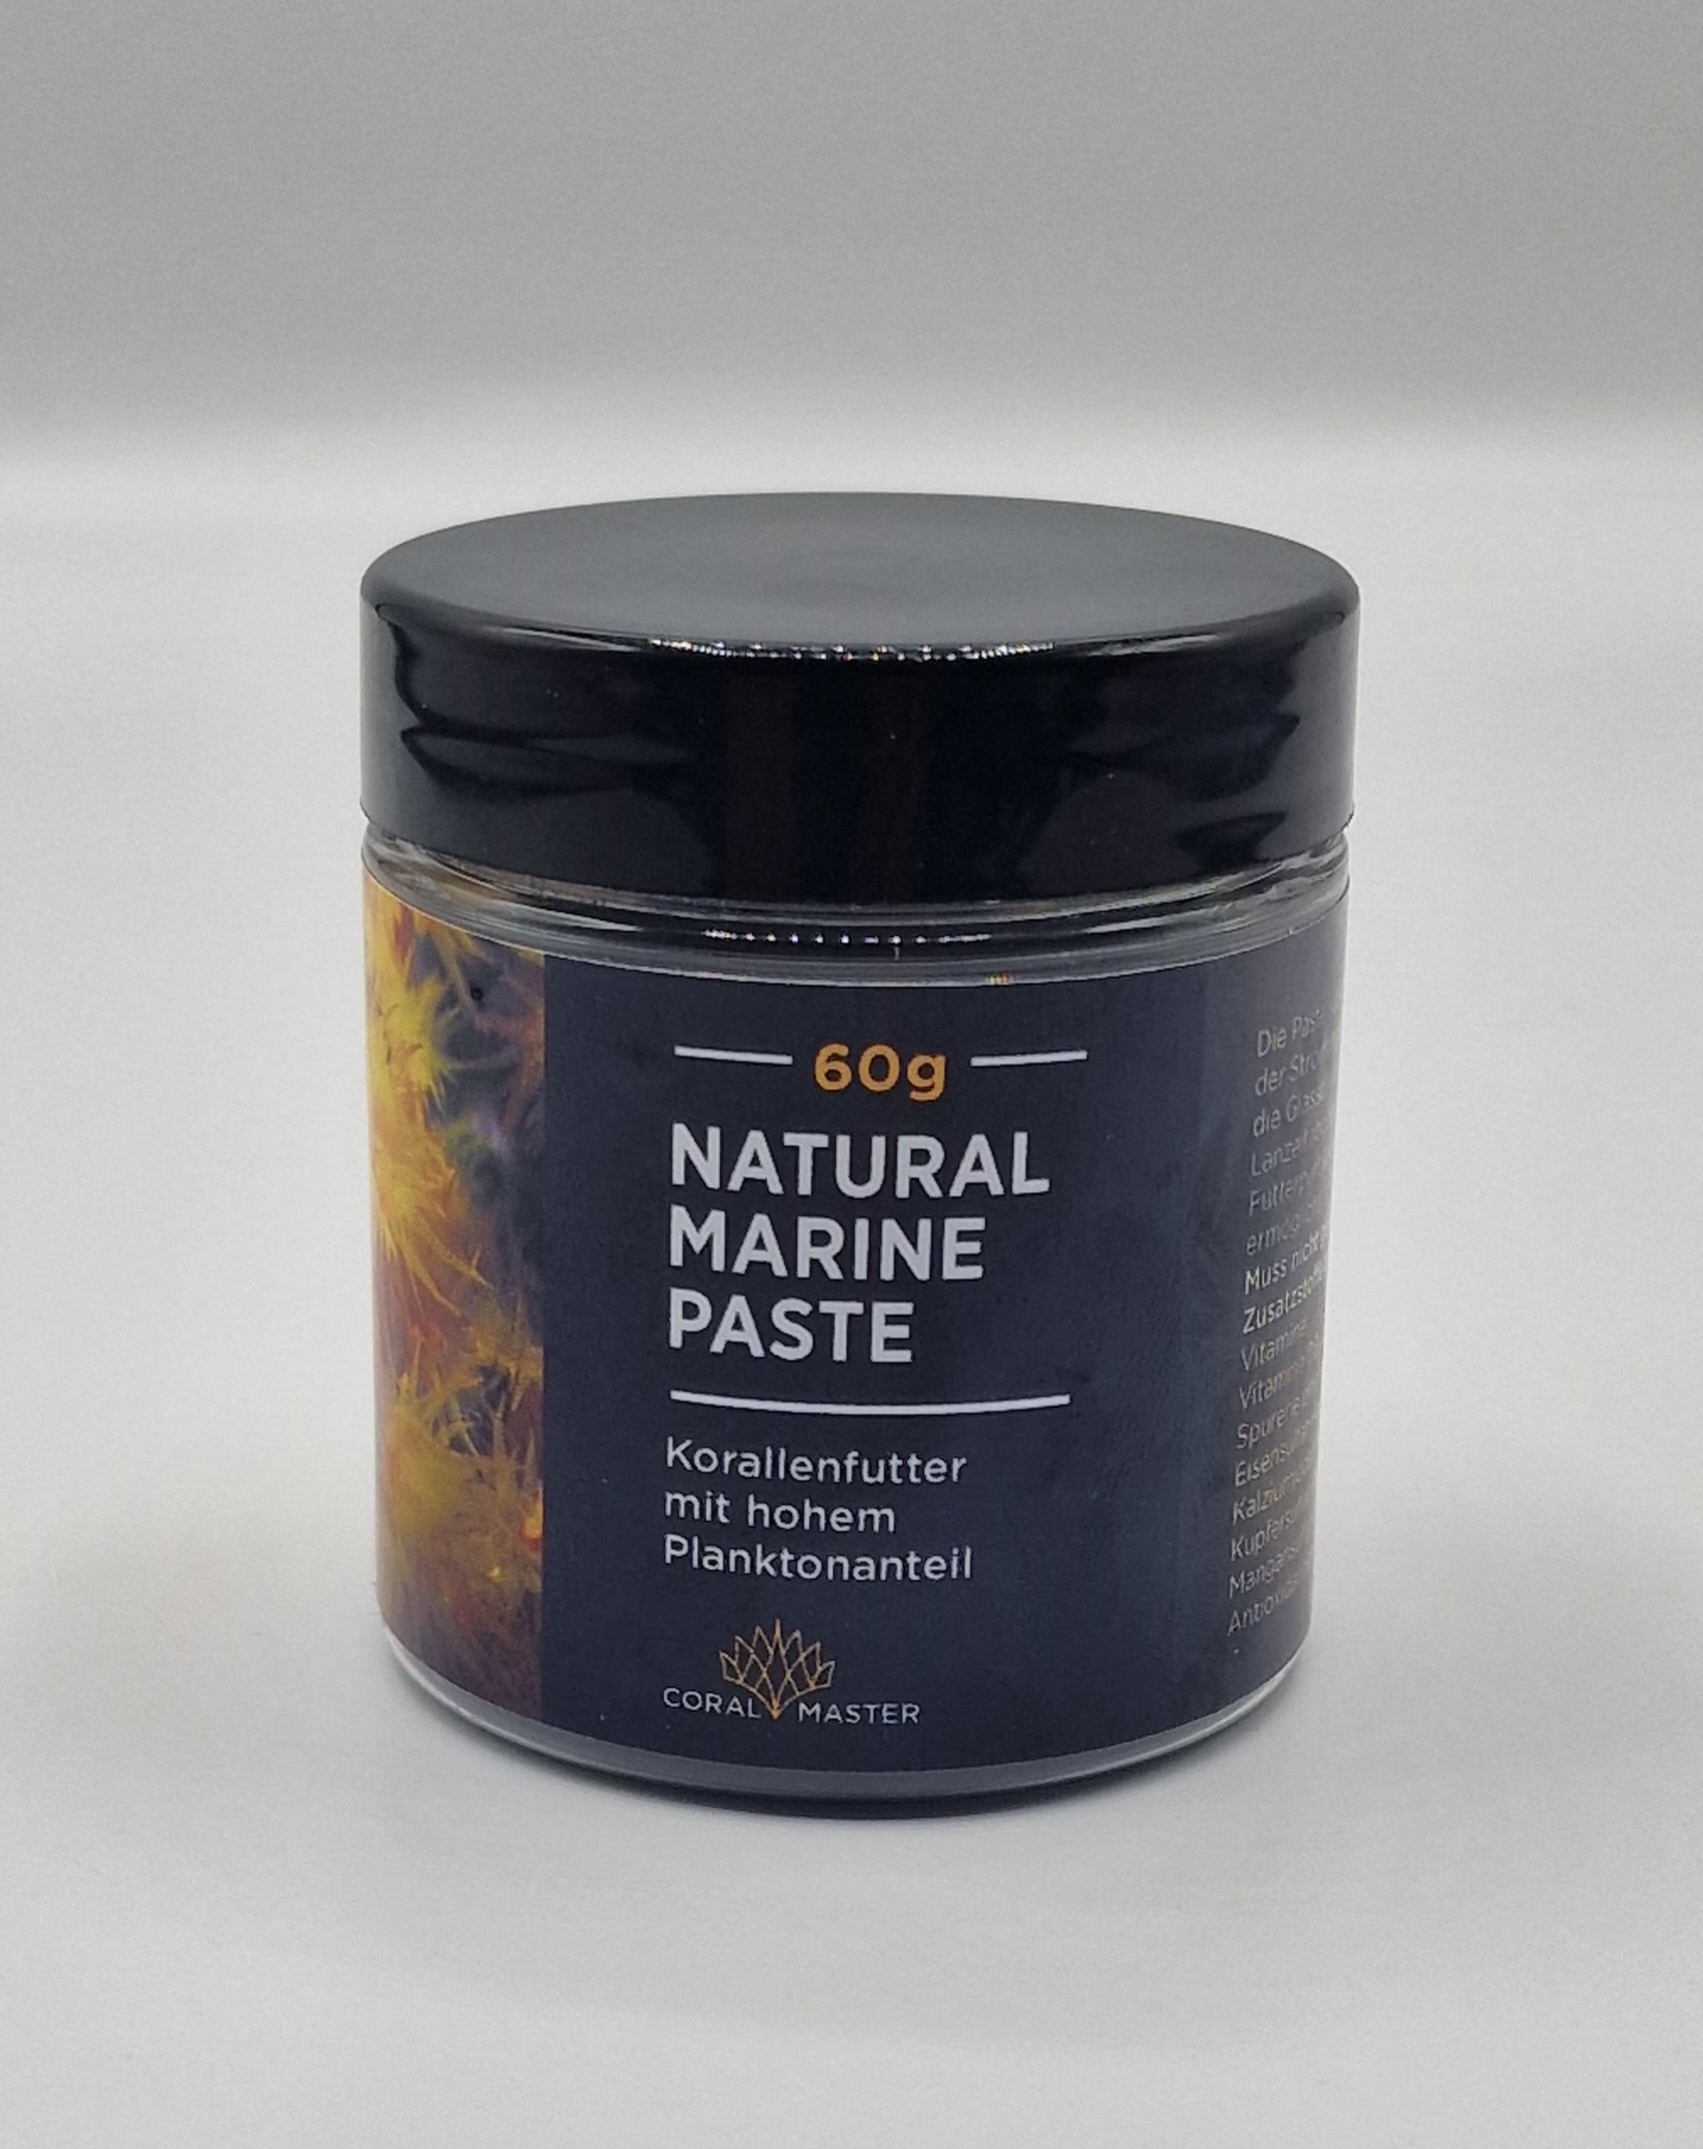 Natural marine paste 60g